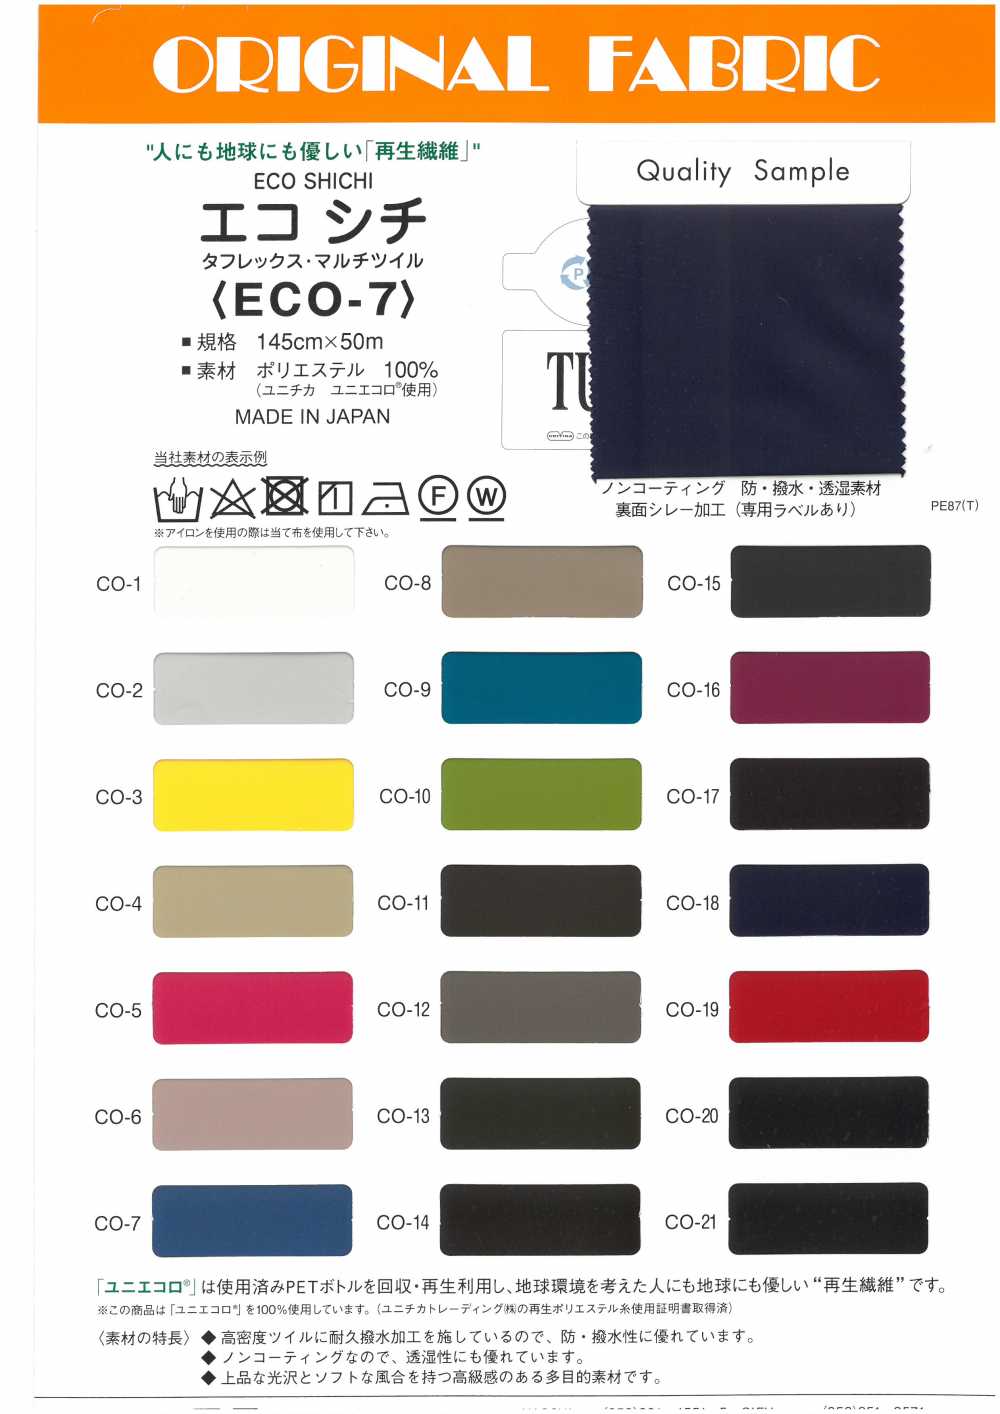 ECO-7 Eco-Citi &lt;Taflex Multi-Twill&gt;[Textile / Fabric] Masuda